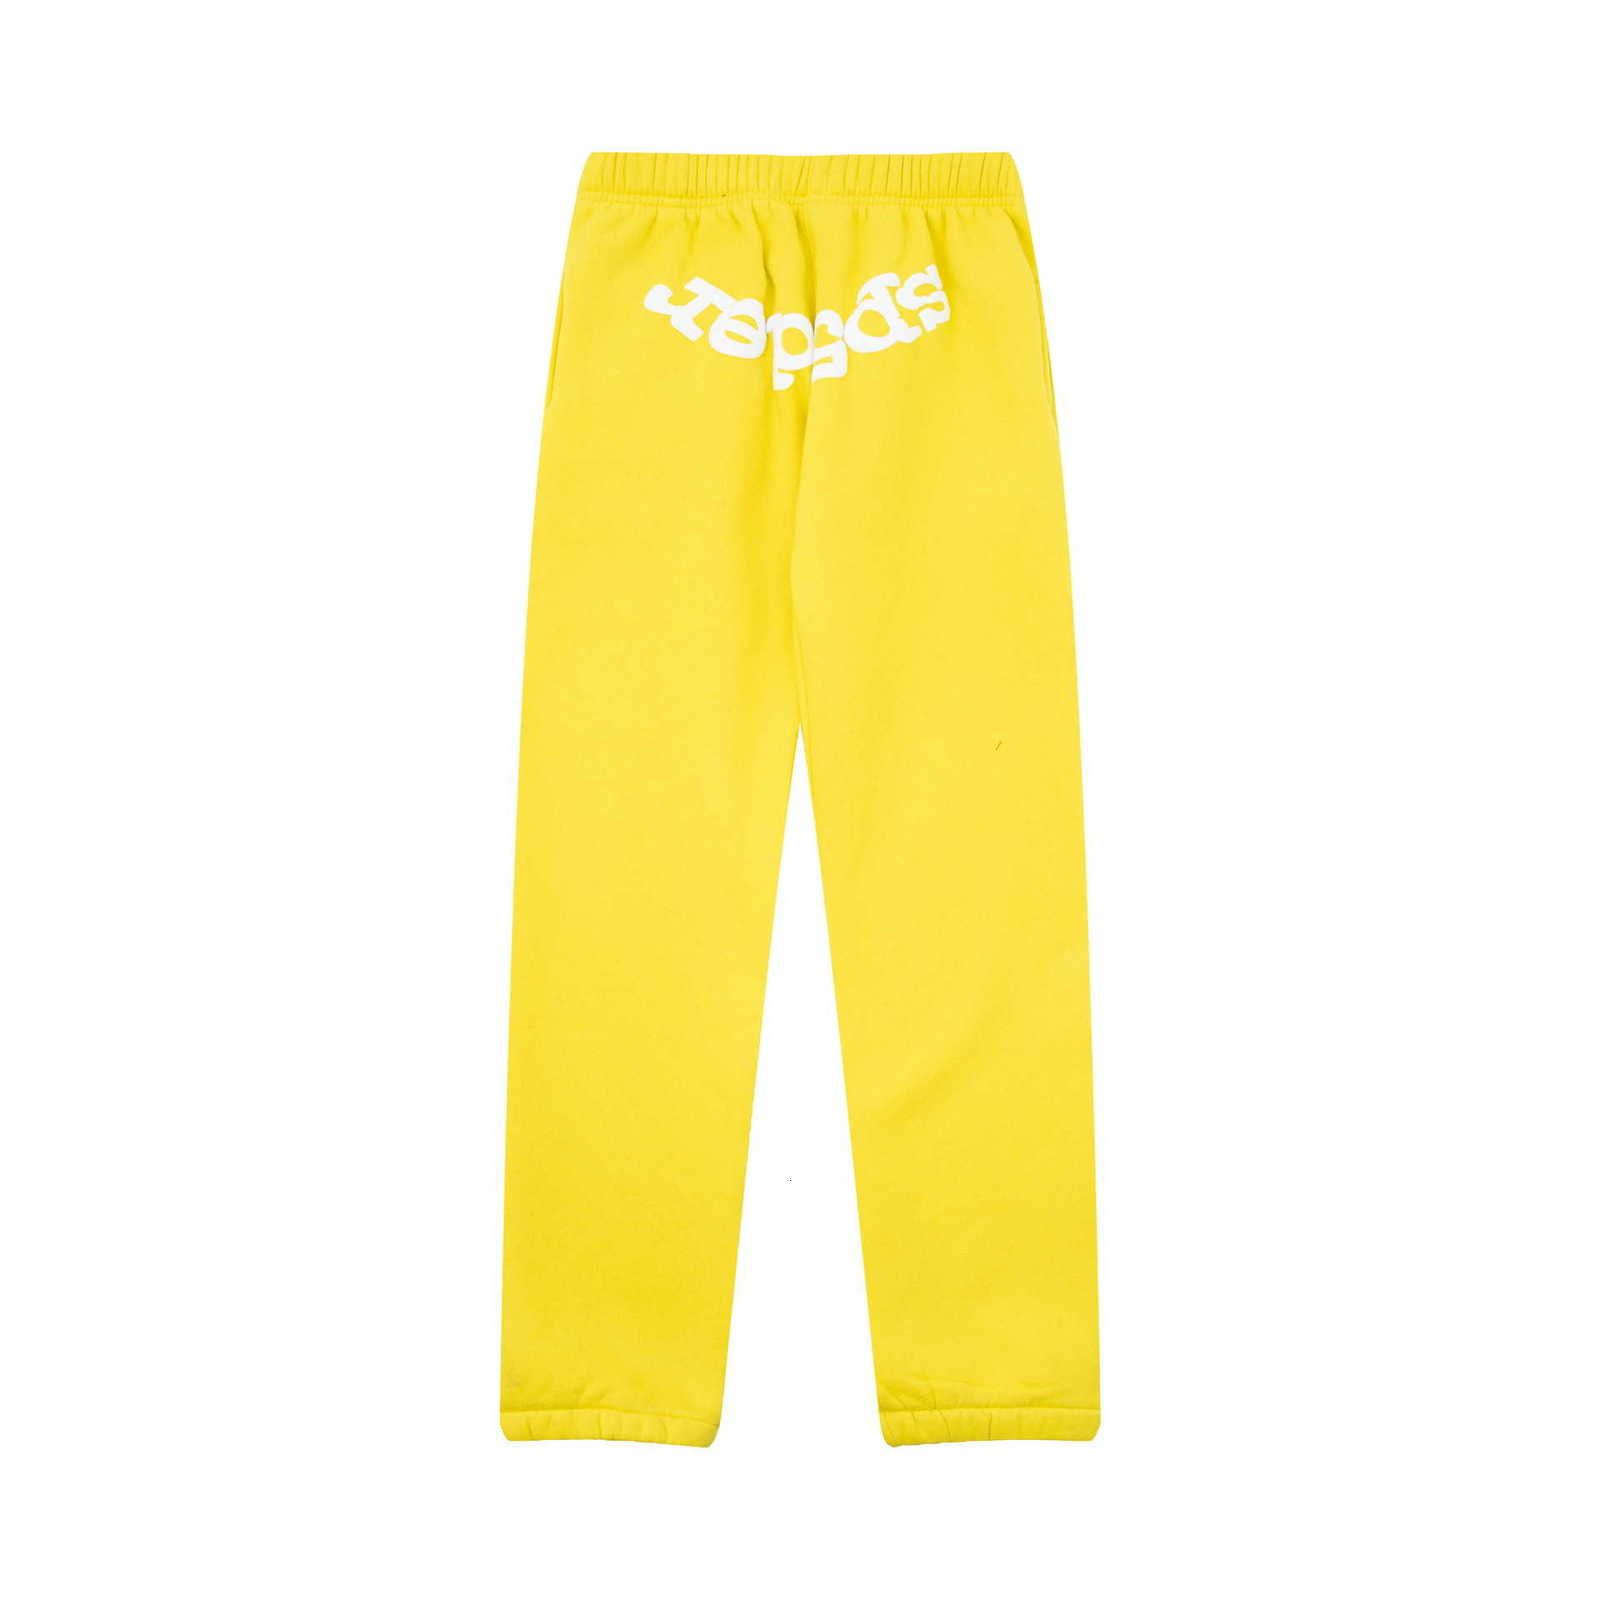 jaune (pantalon sp03)